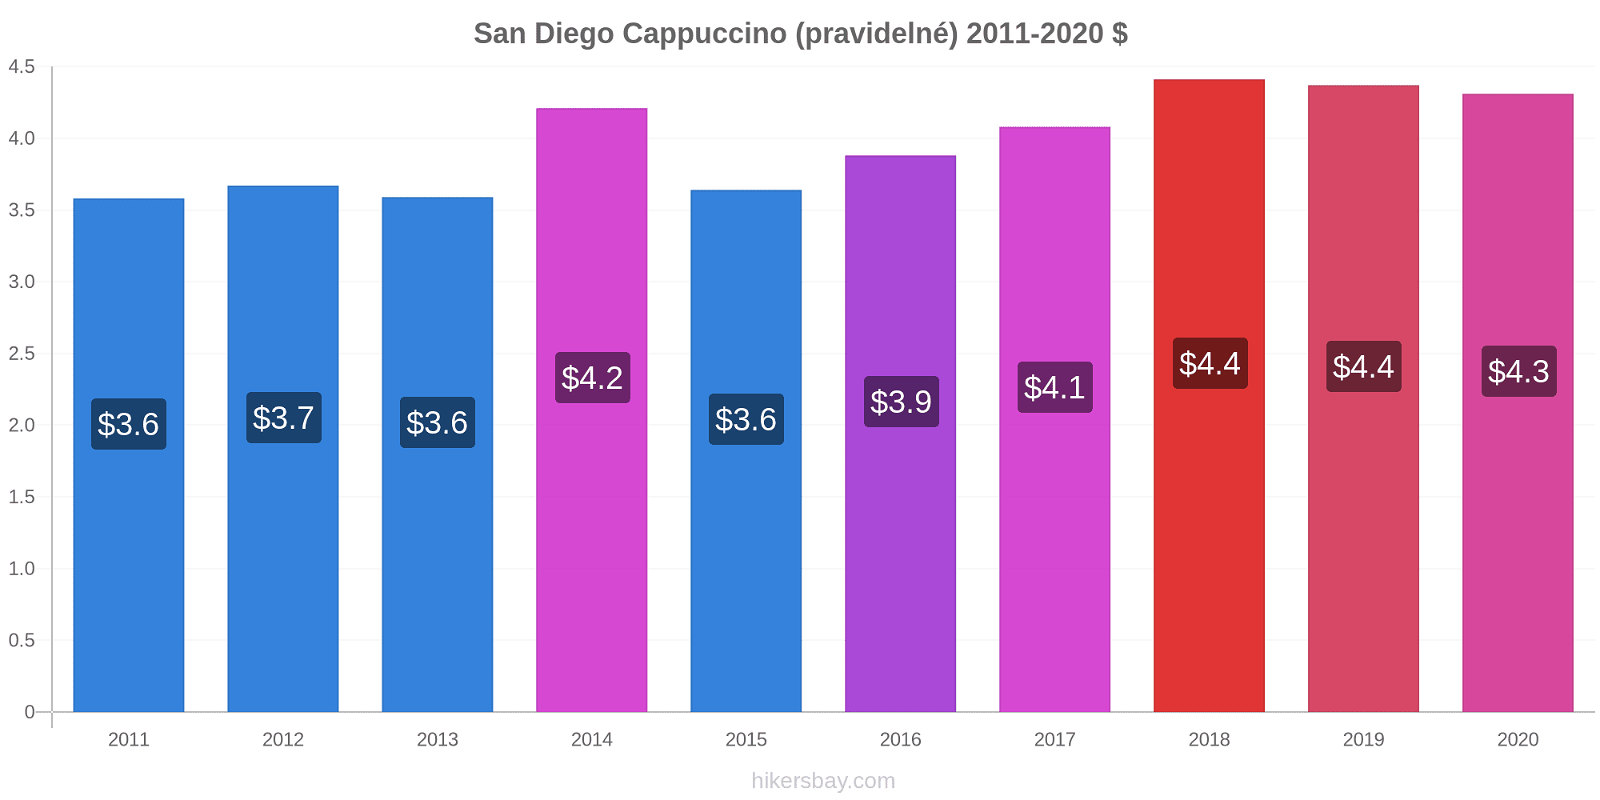 San Diego změny cen Cappuccino (pravidelné) hikersbay.com